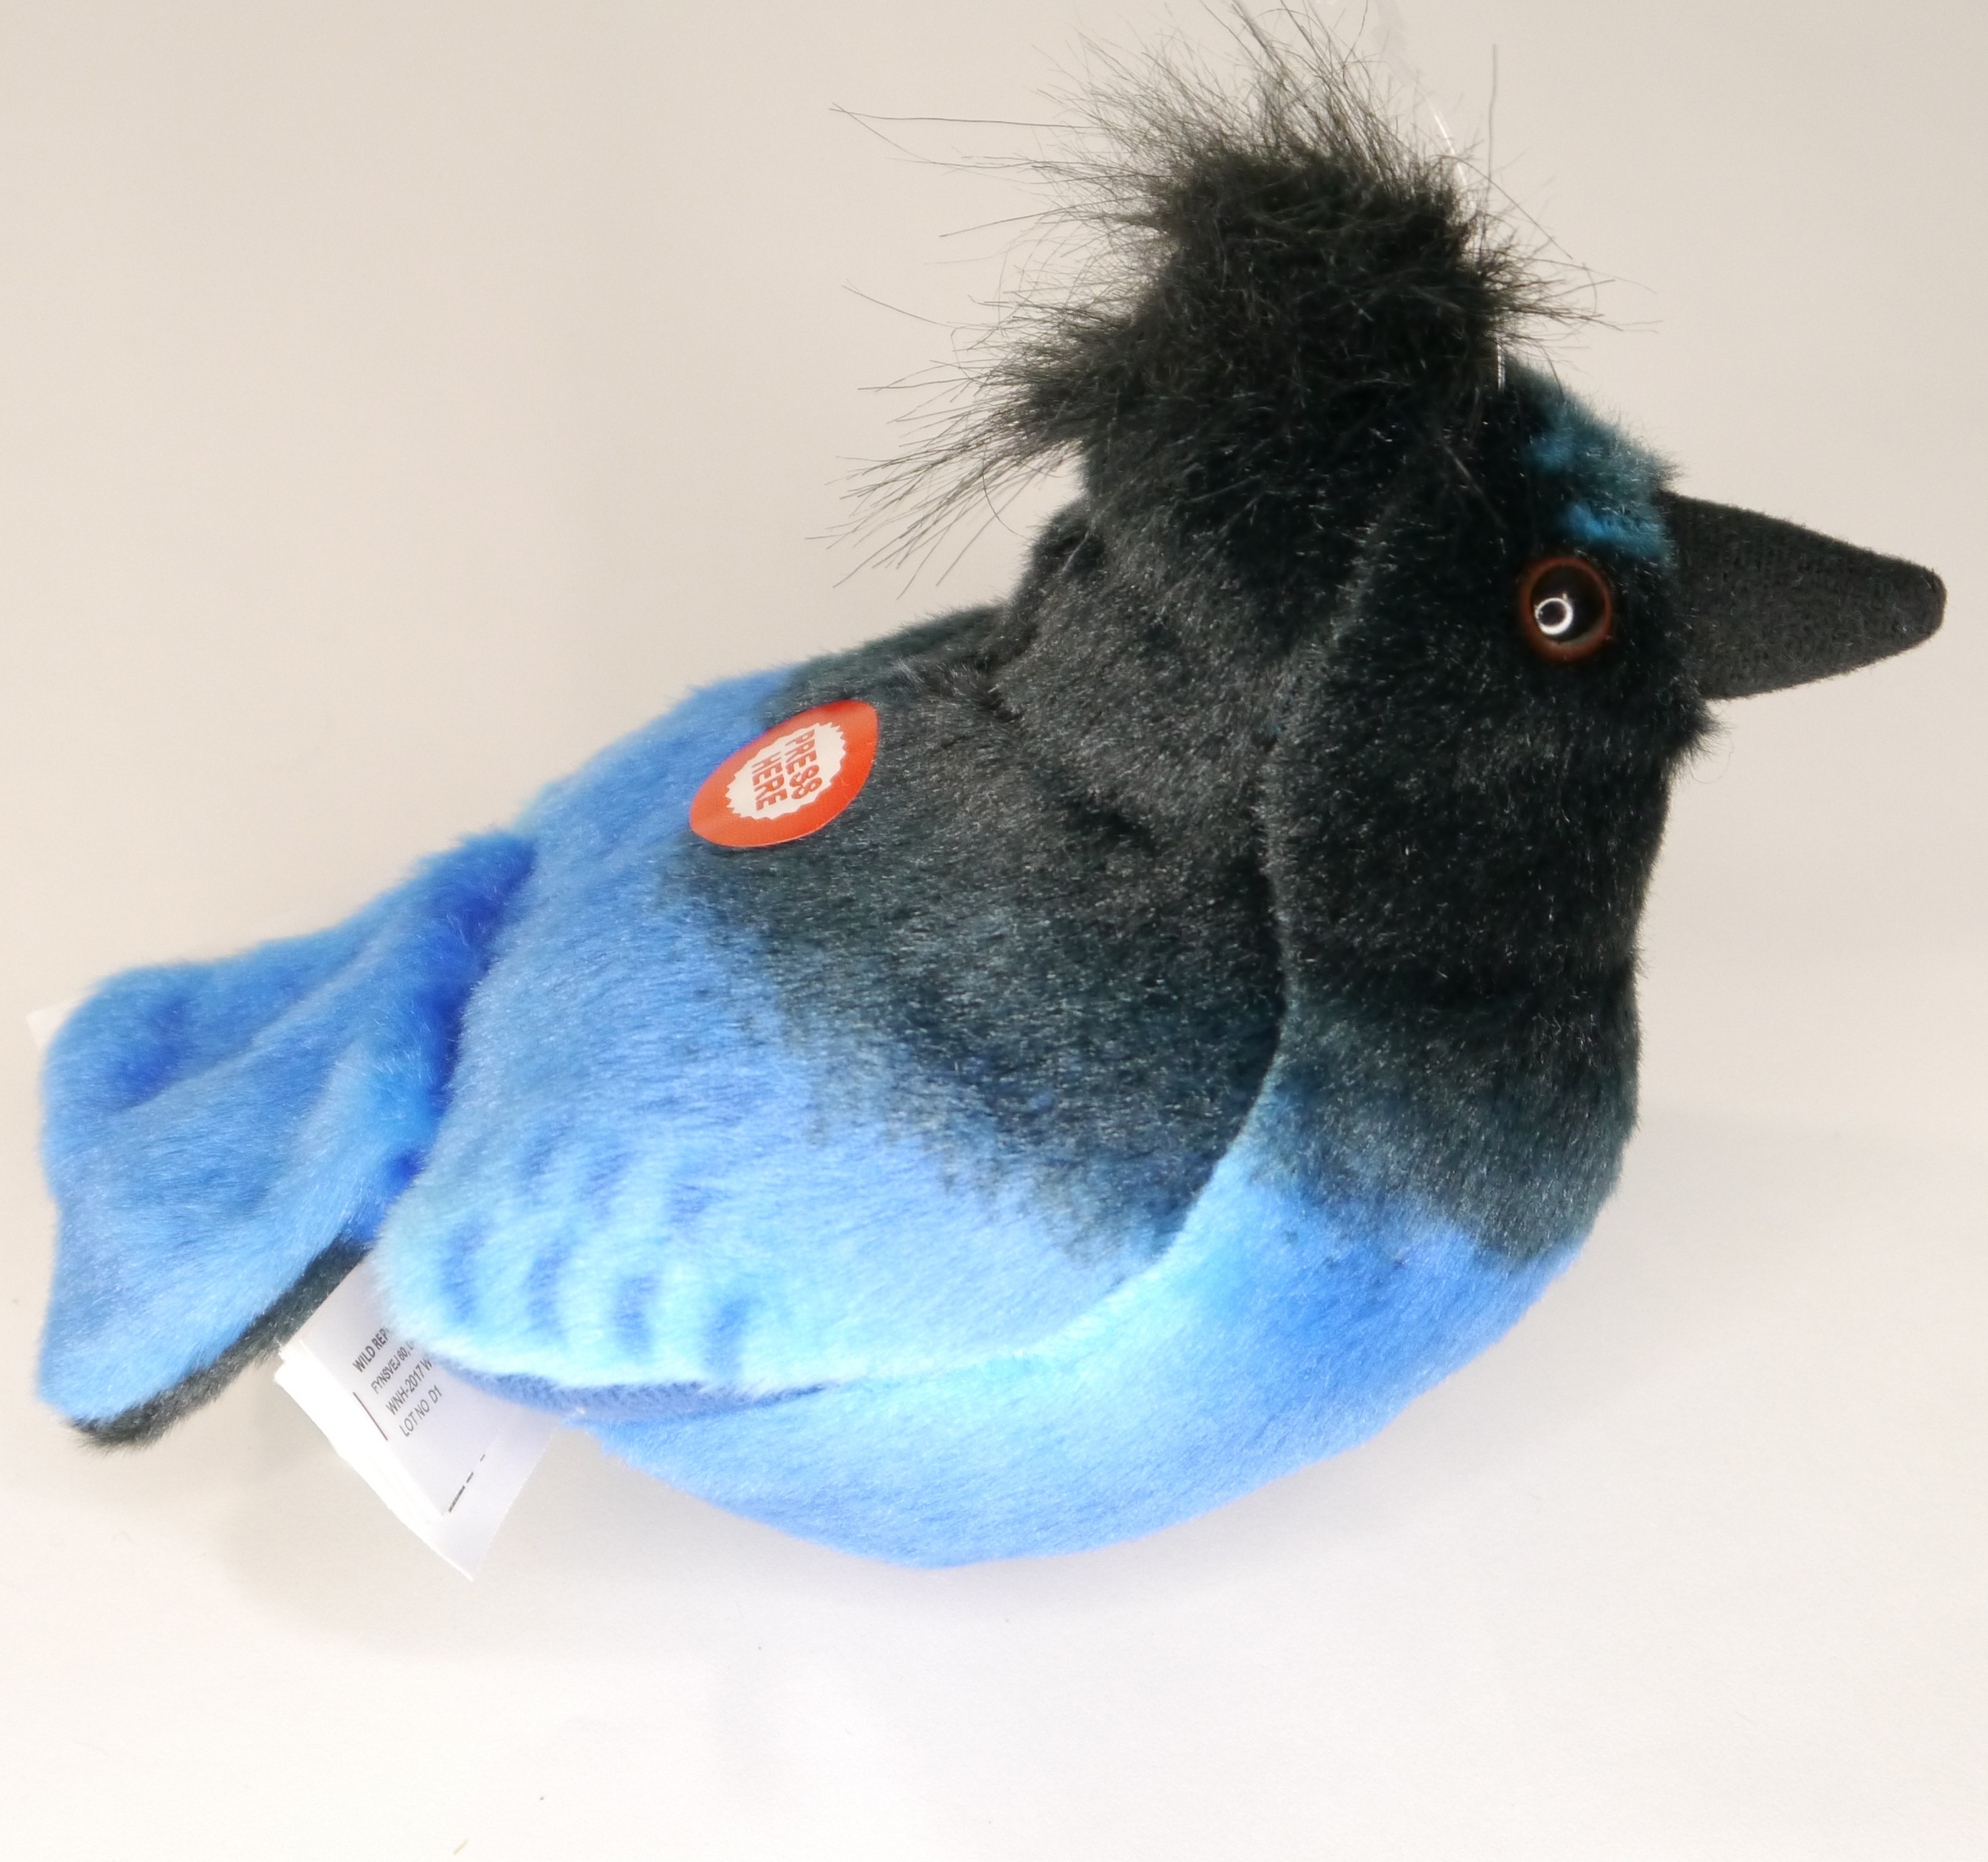 Blue Jay Audubon Plush®